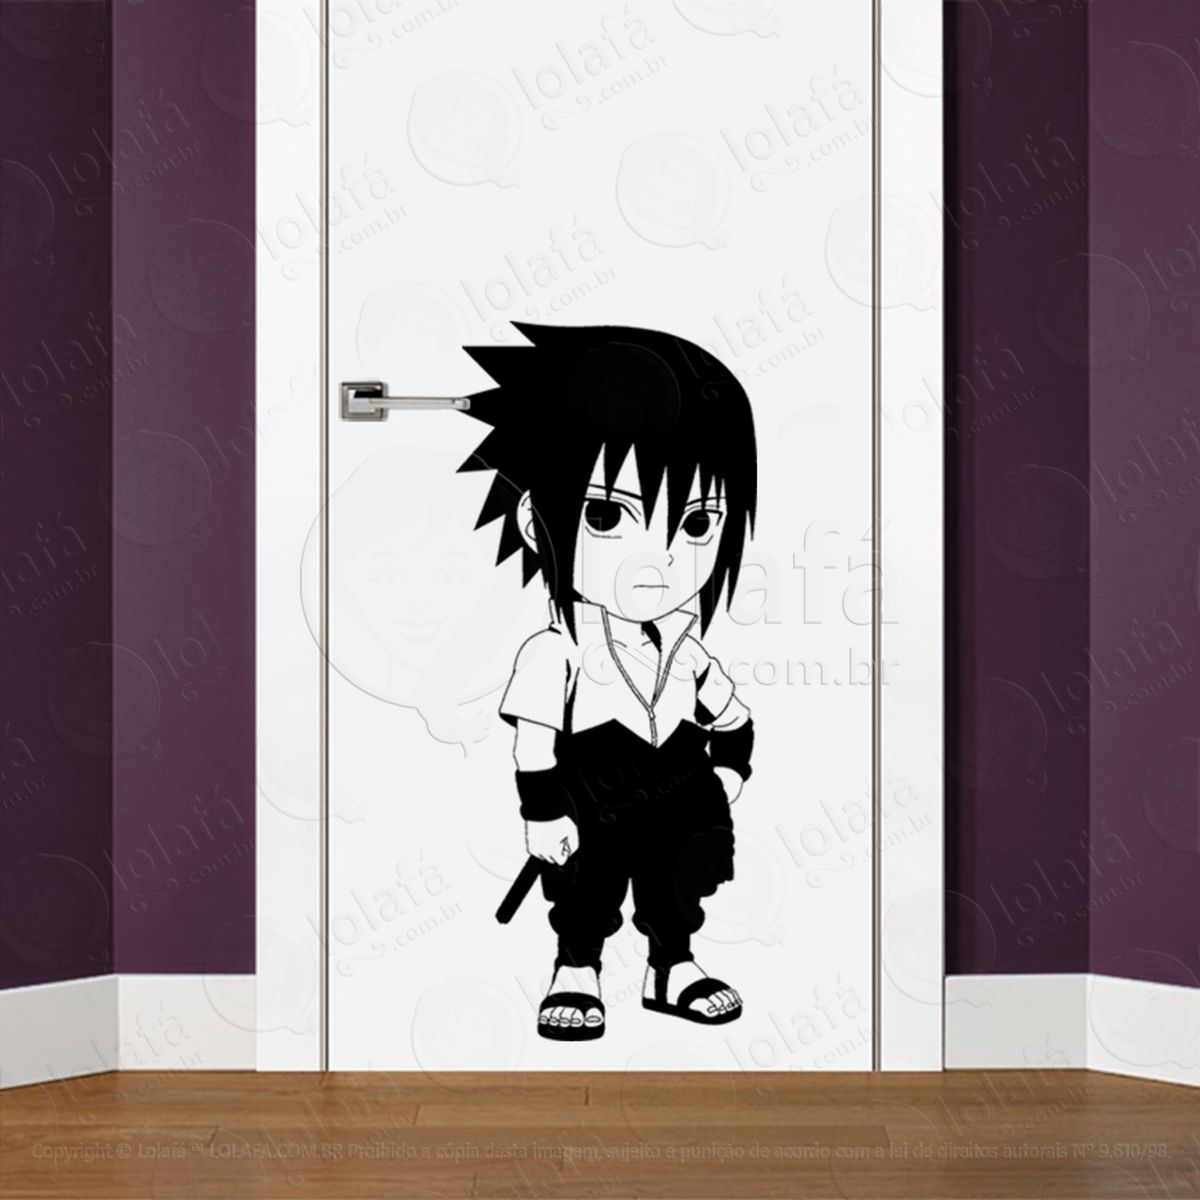 sasuke uchiha adesivo de parede para quarto, porta e vidro - mod:40